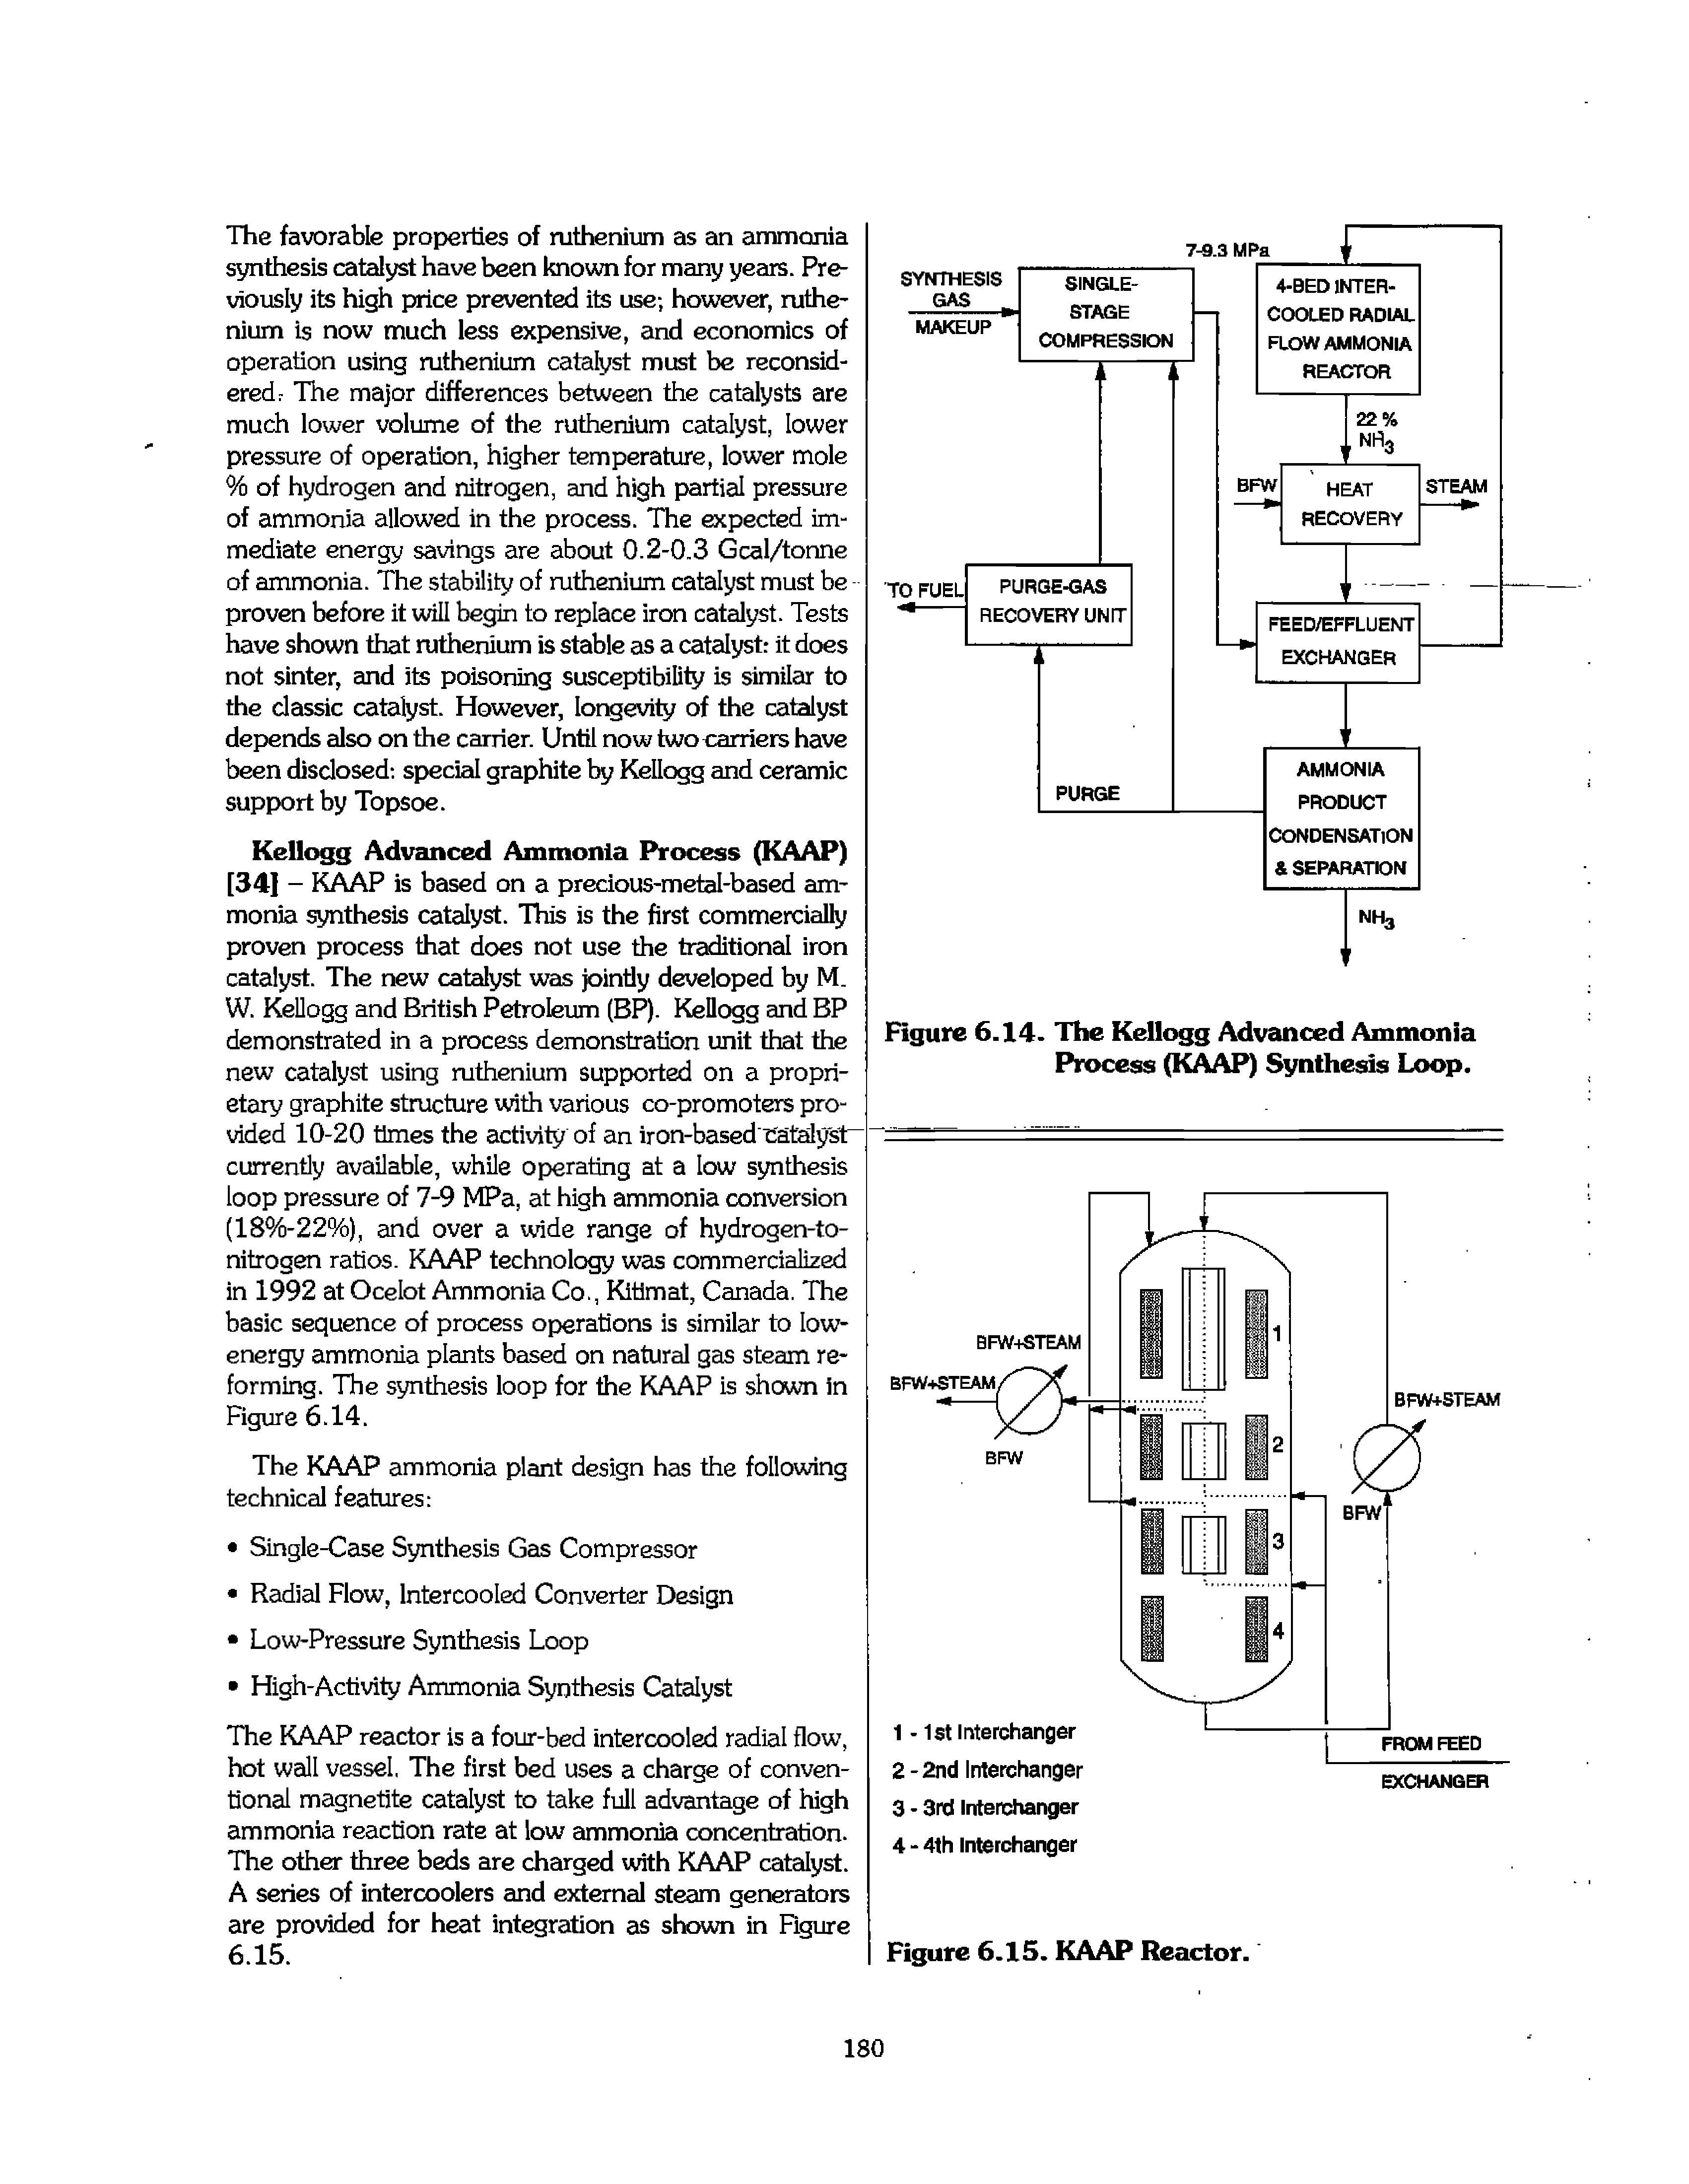 Figure 6.14. The Kellogg Advanced Ammonia Process (KAAI Synthesis Loop.